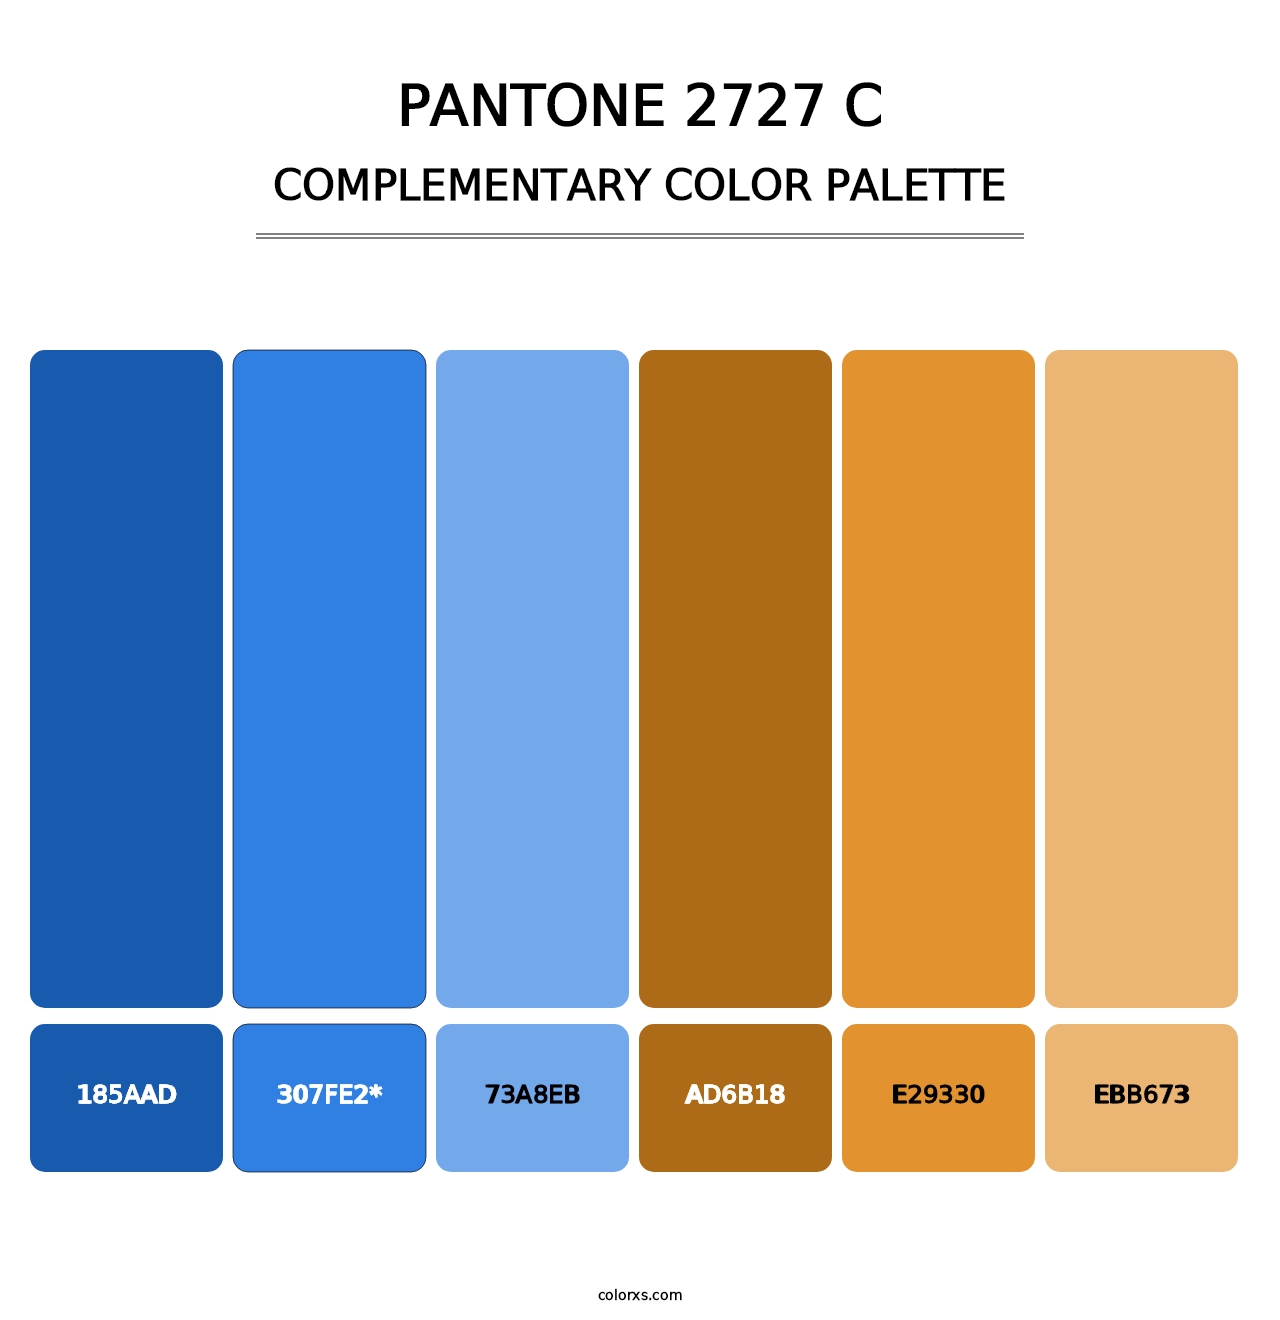 PANTONE 2727 C - Complementary Color Palette